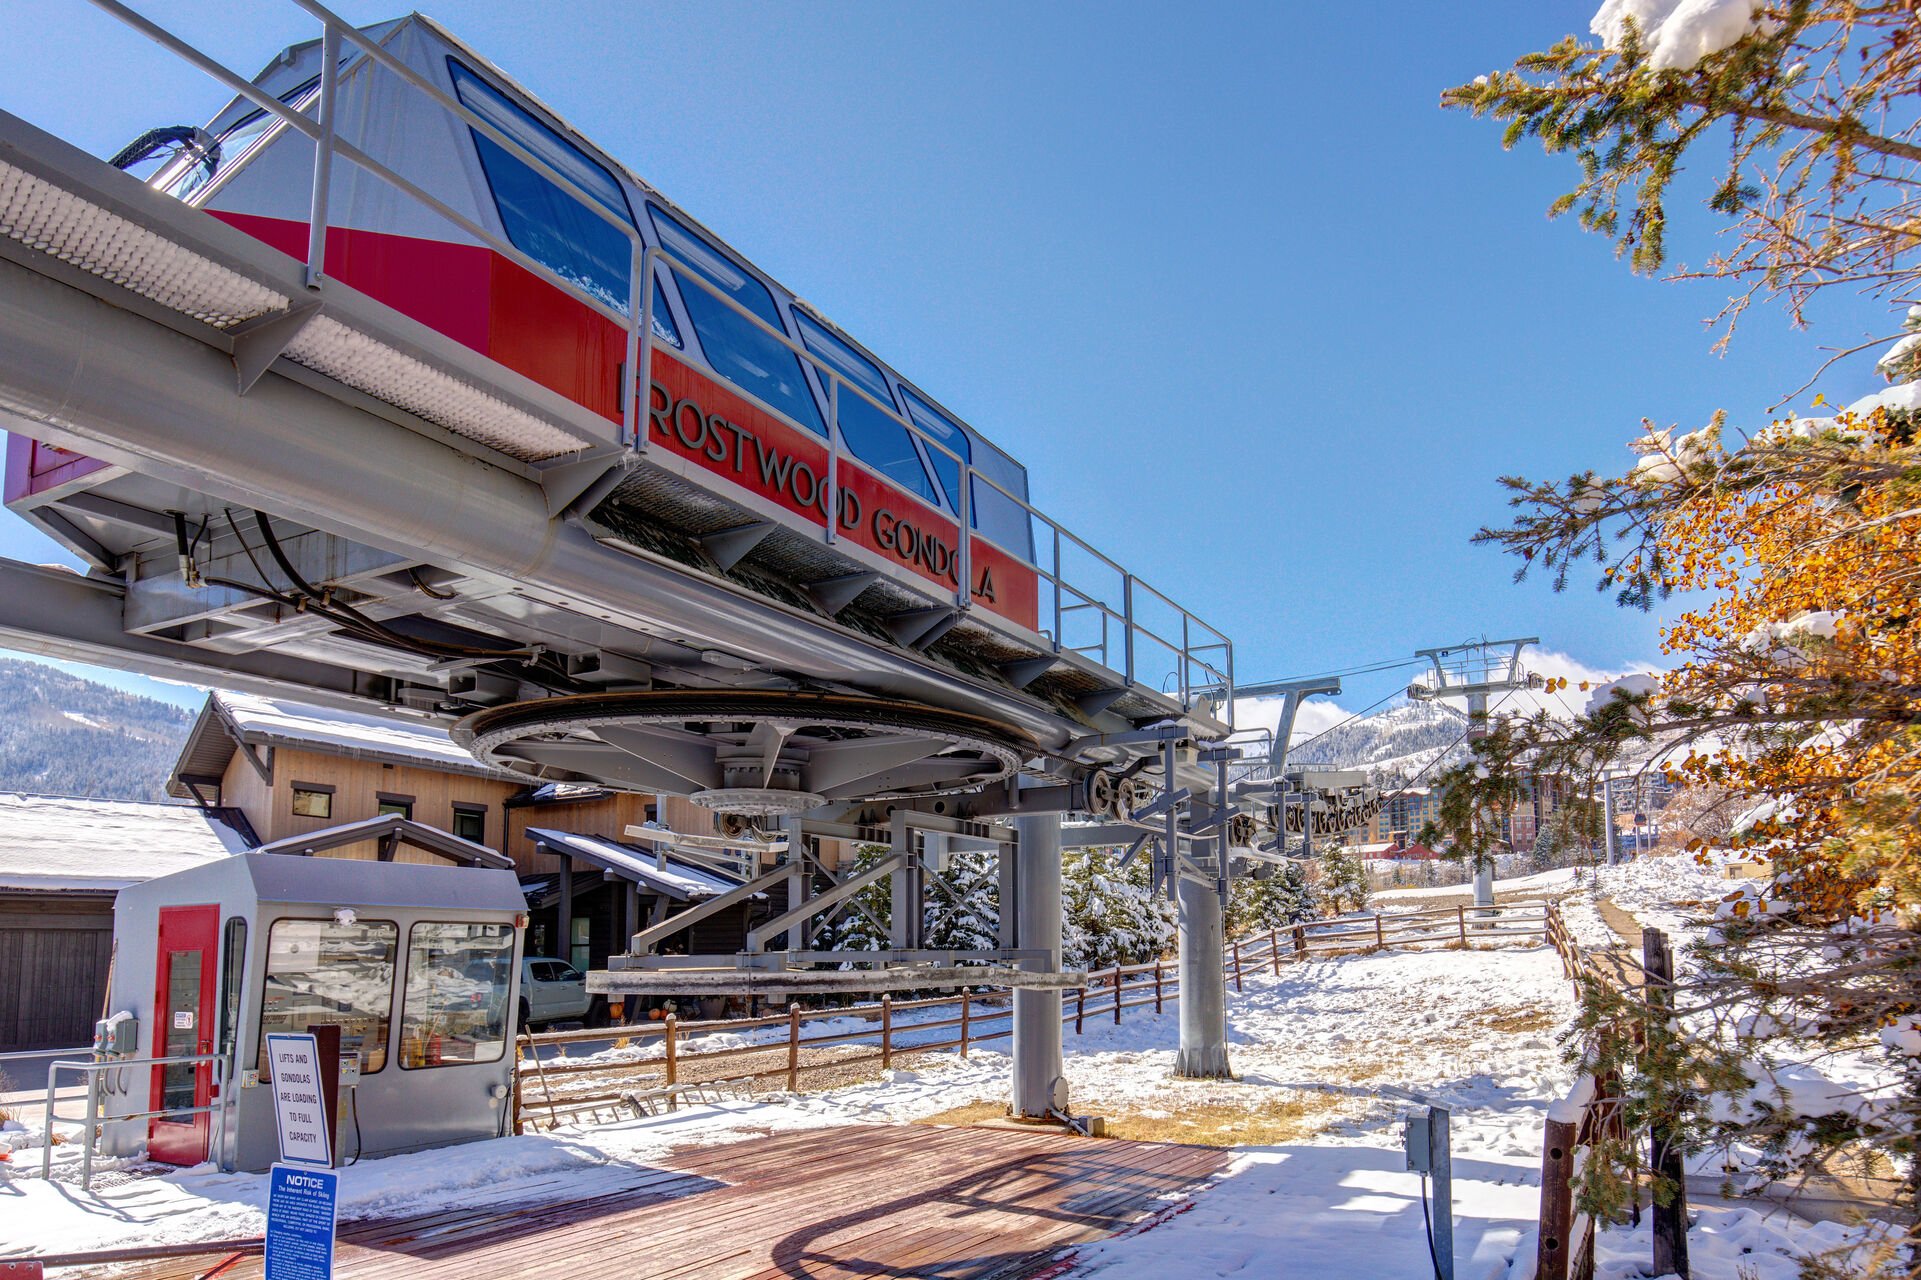 Frostwood Gondola for Ski Access